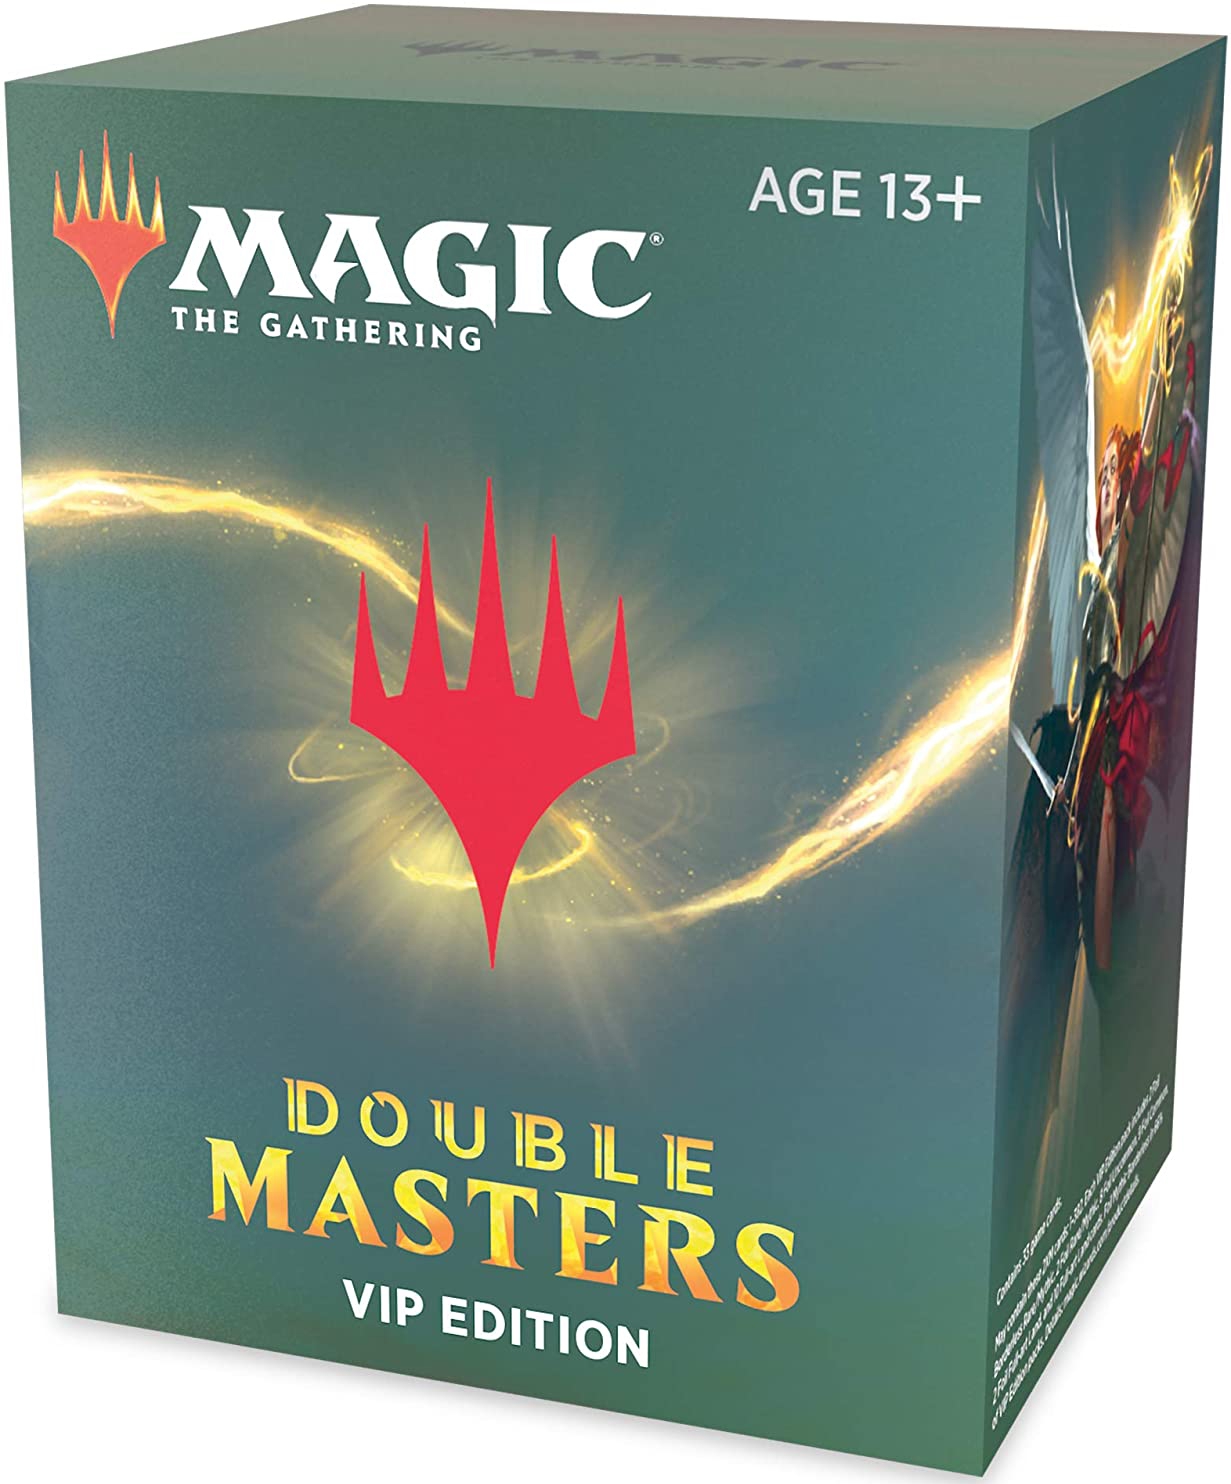 Magic Double Masters VIP Edition